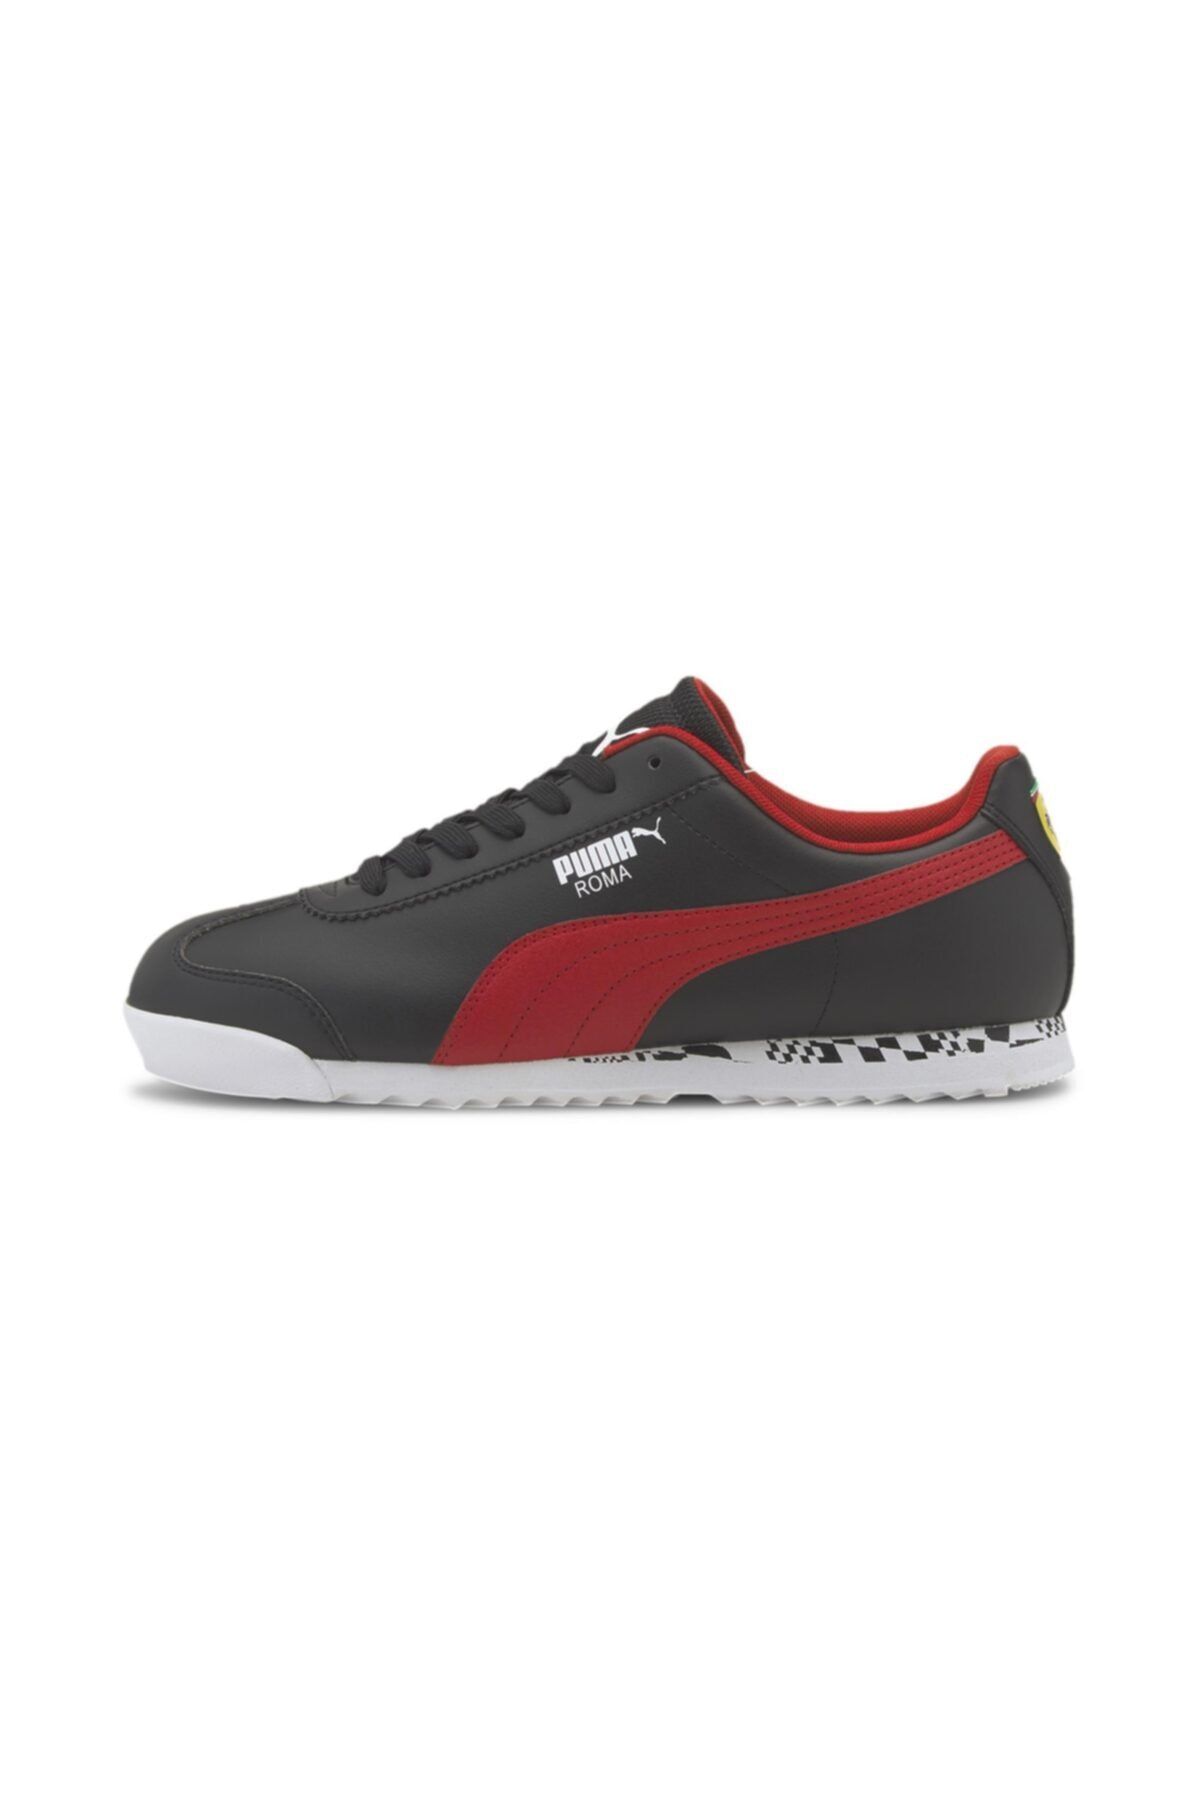 Puma FERRARI RACE ROMA Siyah Erkek Sneaker Ayakkabı 101119002